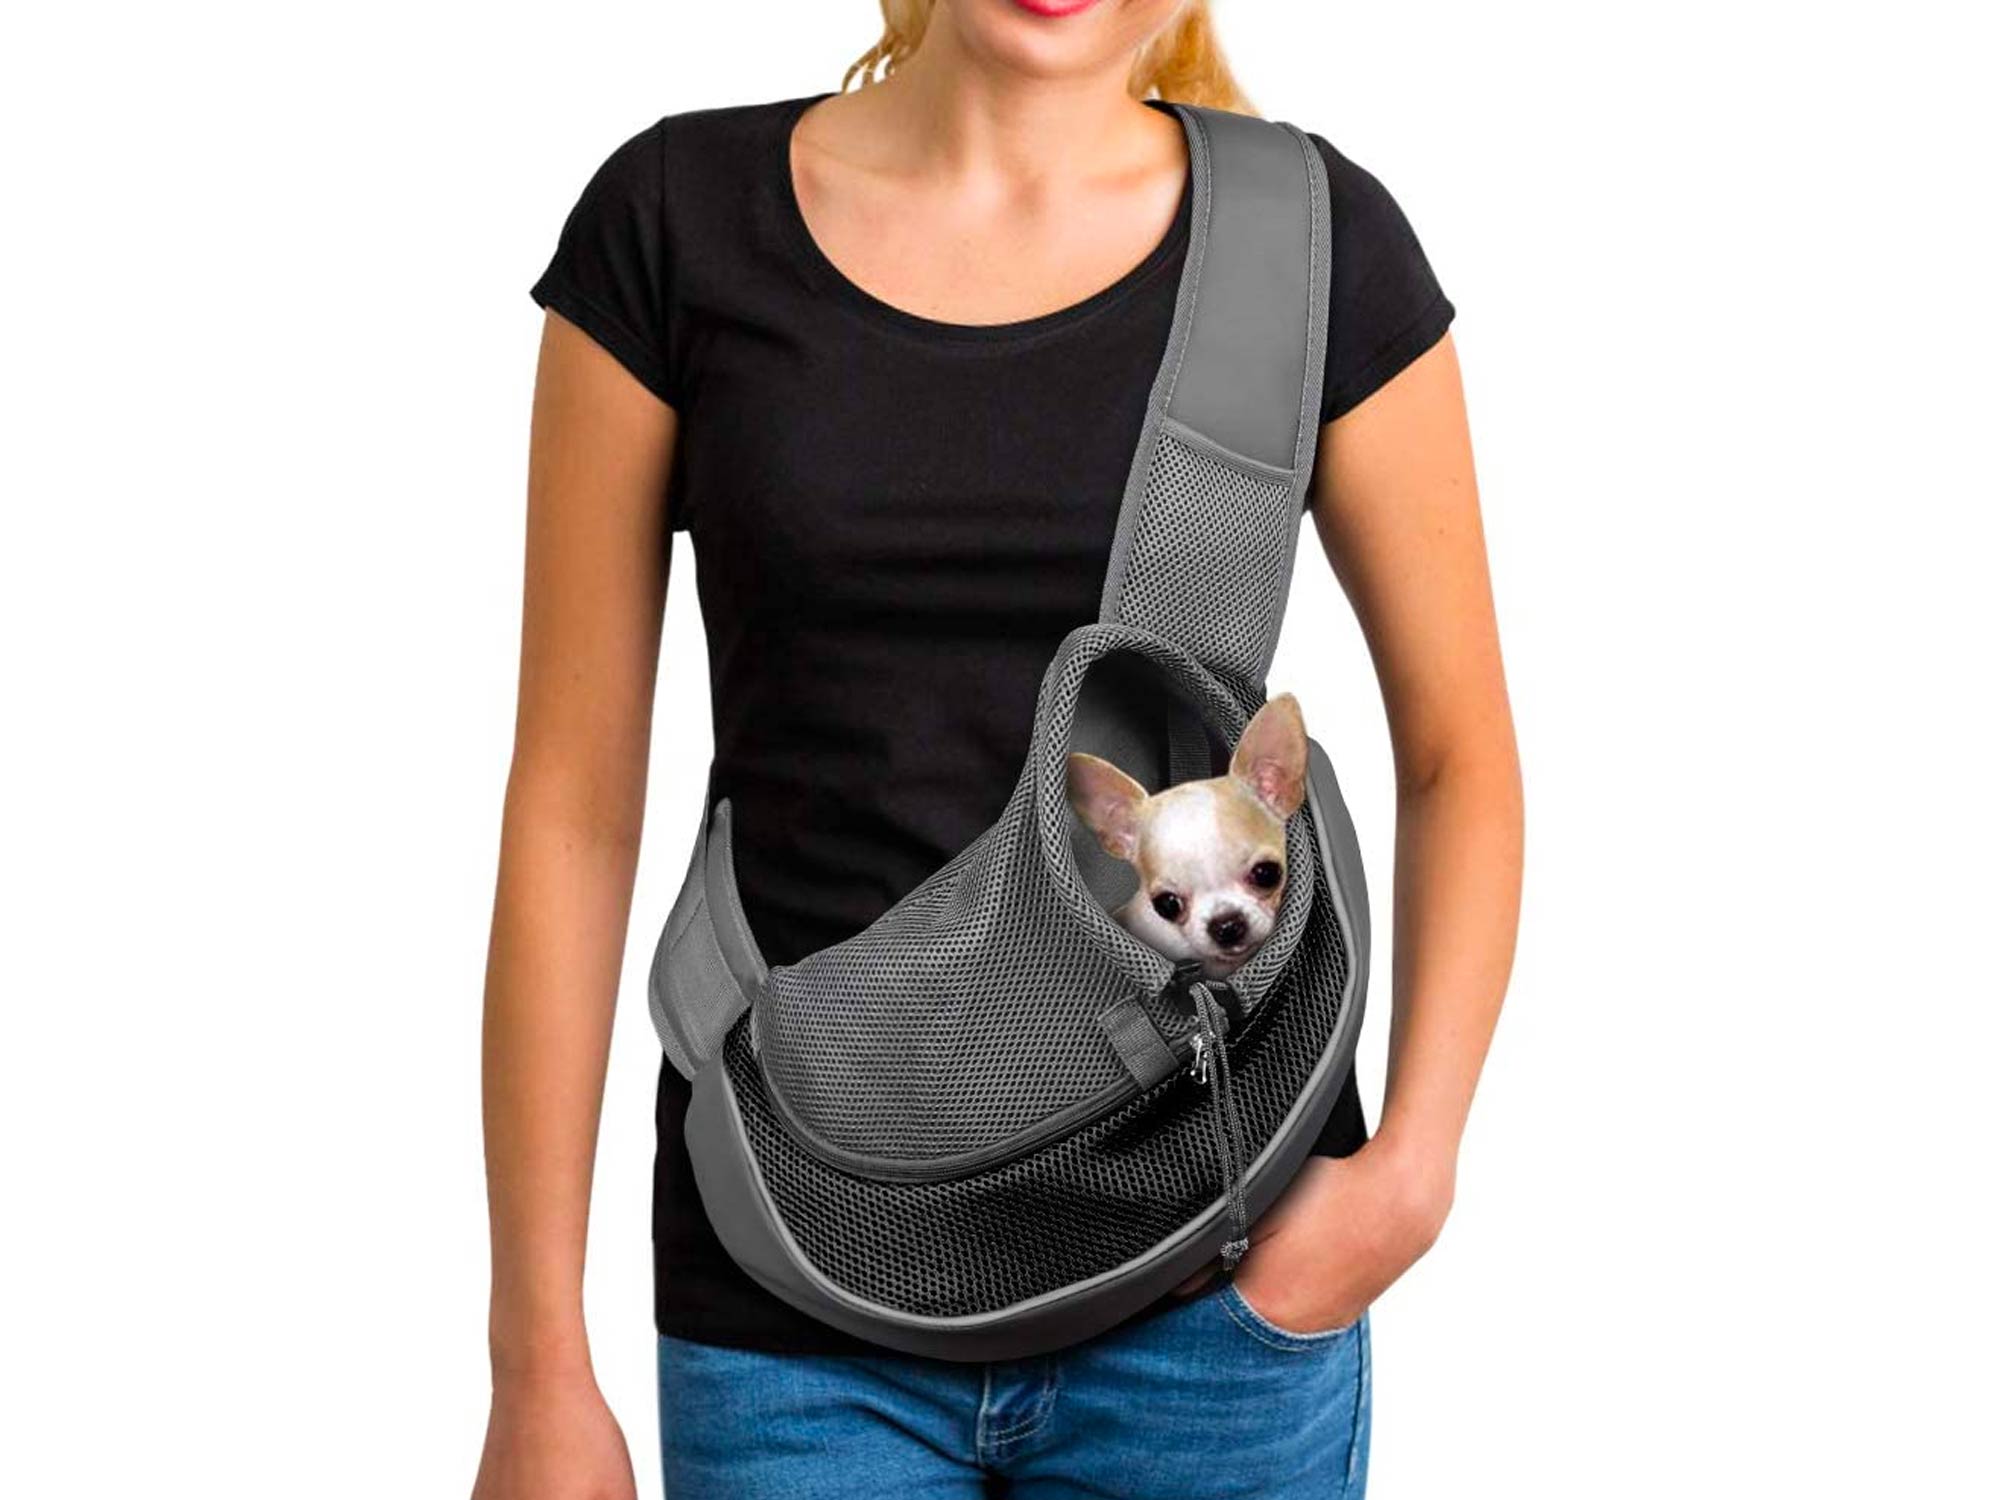 YUDODO Pet Dog Sling Carrier Breathable Mesh Travel Safe Sling Bag Carrier for Dogs Cats